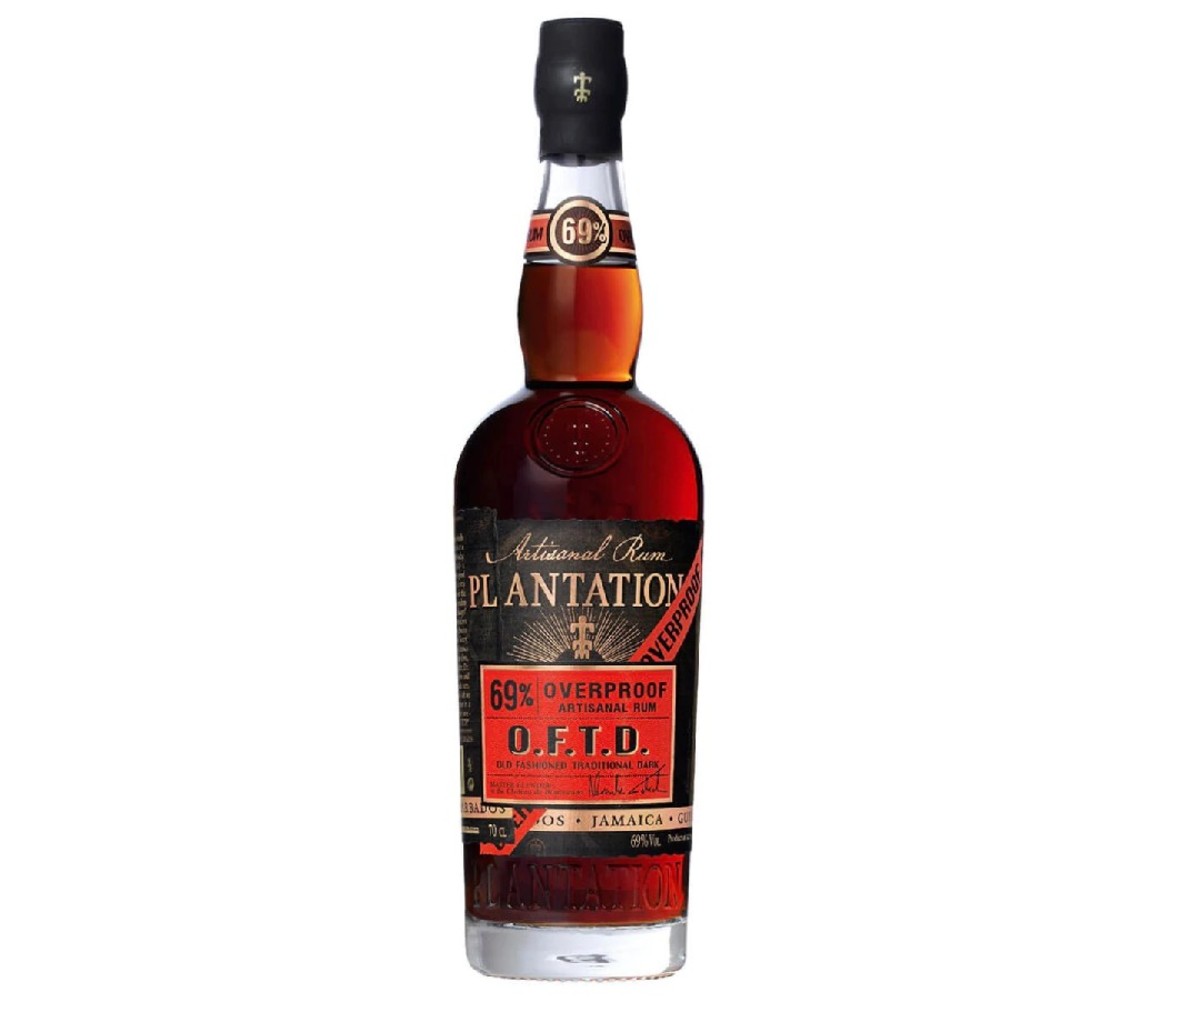 Bottle of Plantation O.F.T.D. dark rum